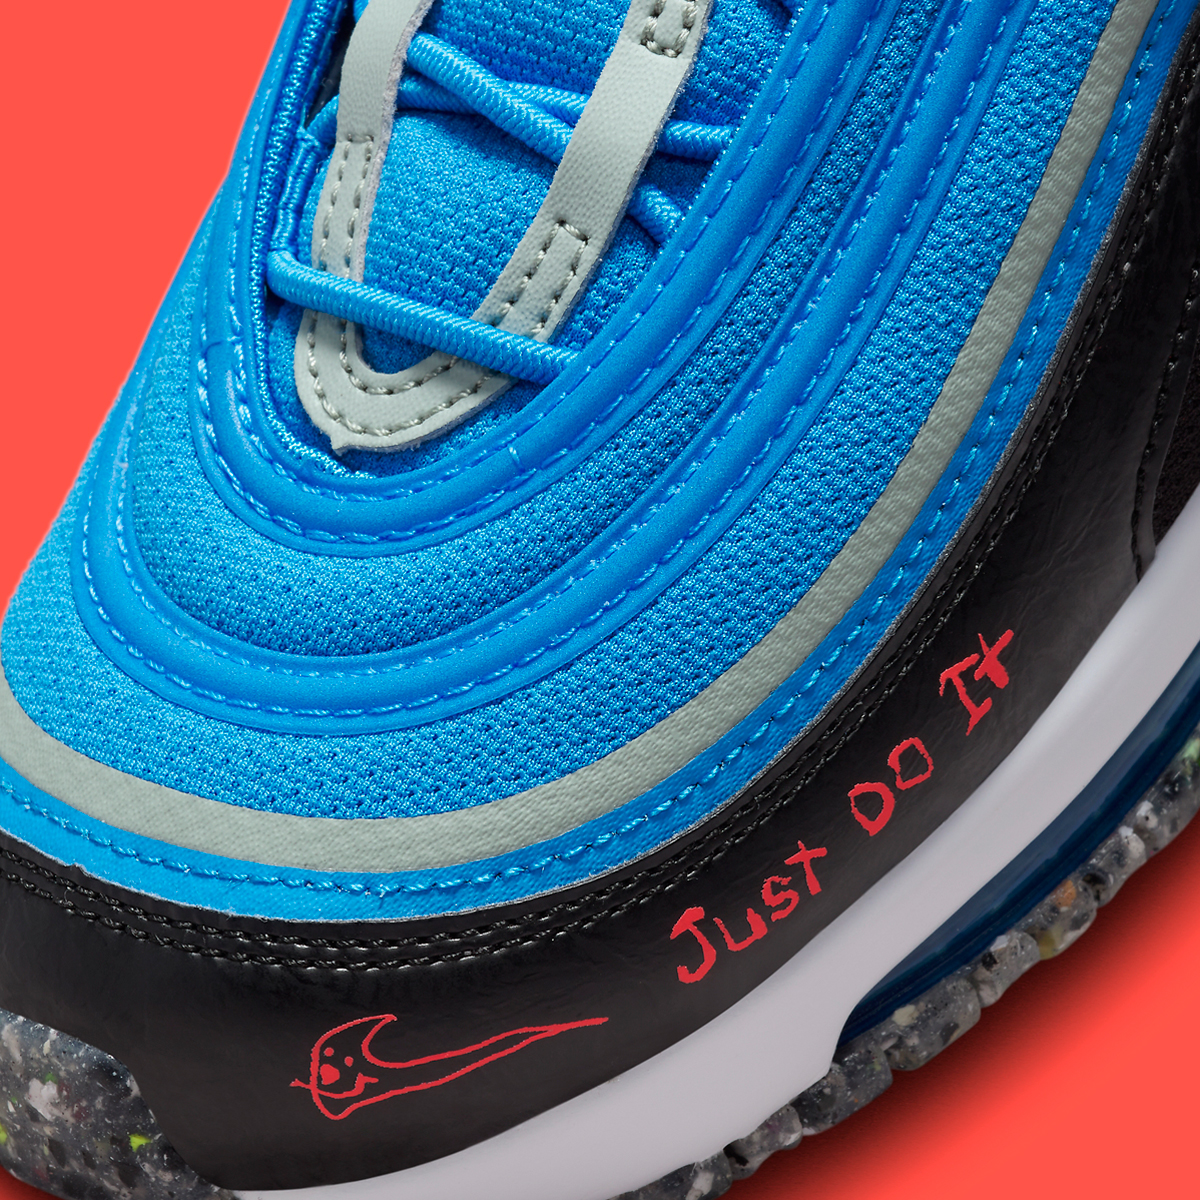 Nike Nike Cortez Classic Azul Oscuro y Amarillas cantidad Gs Just Do It Fb9111 400 6